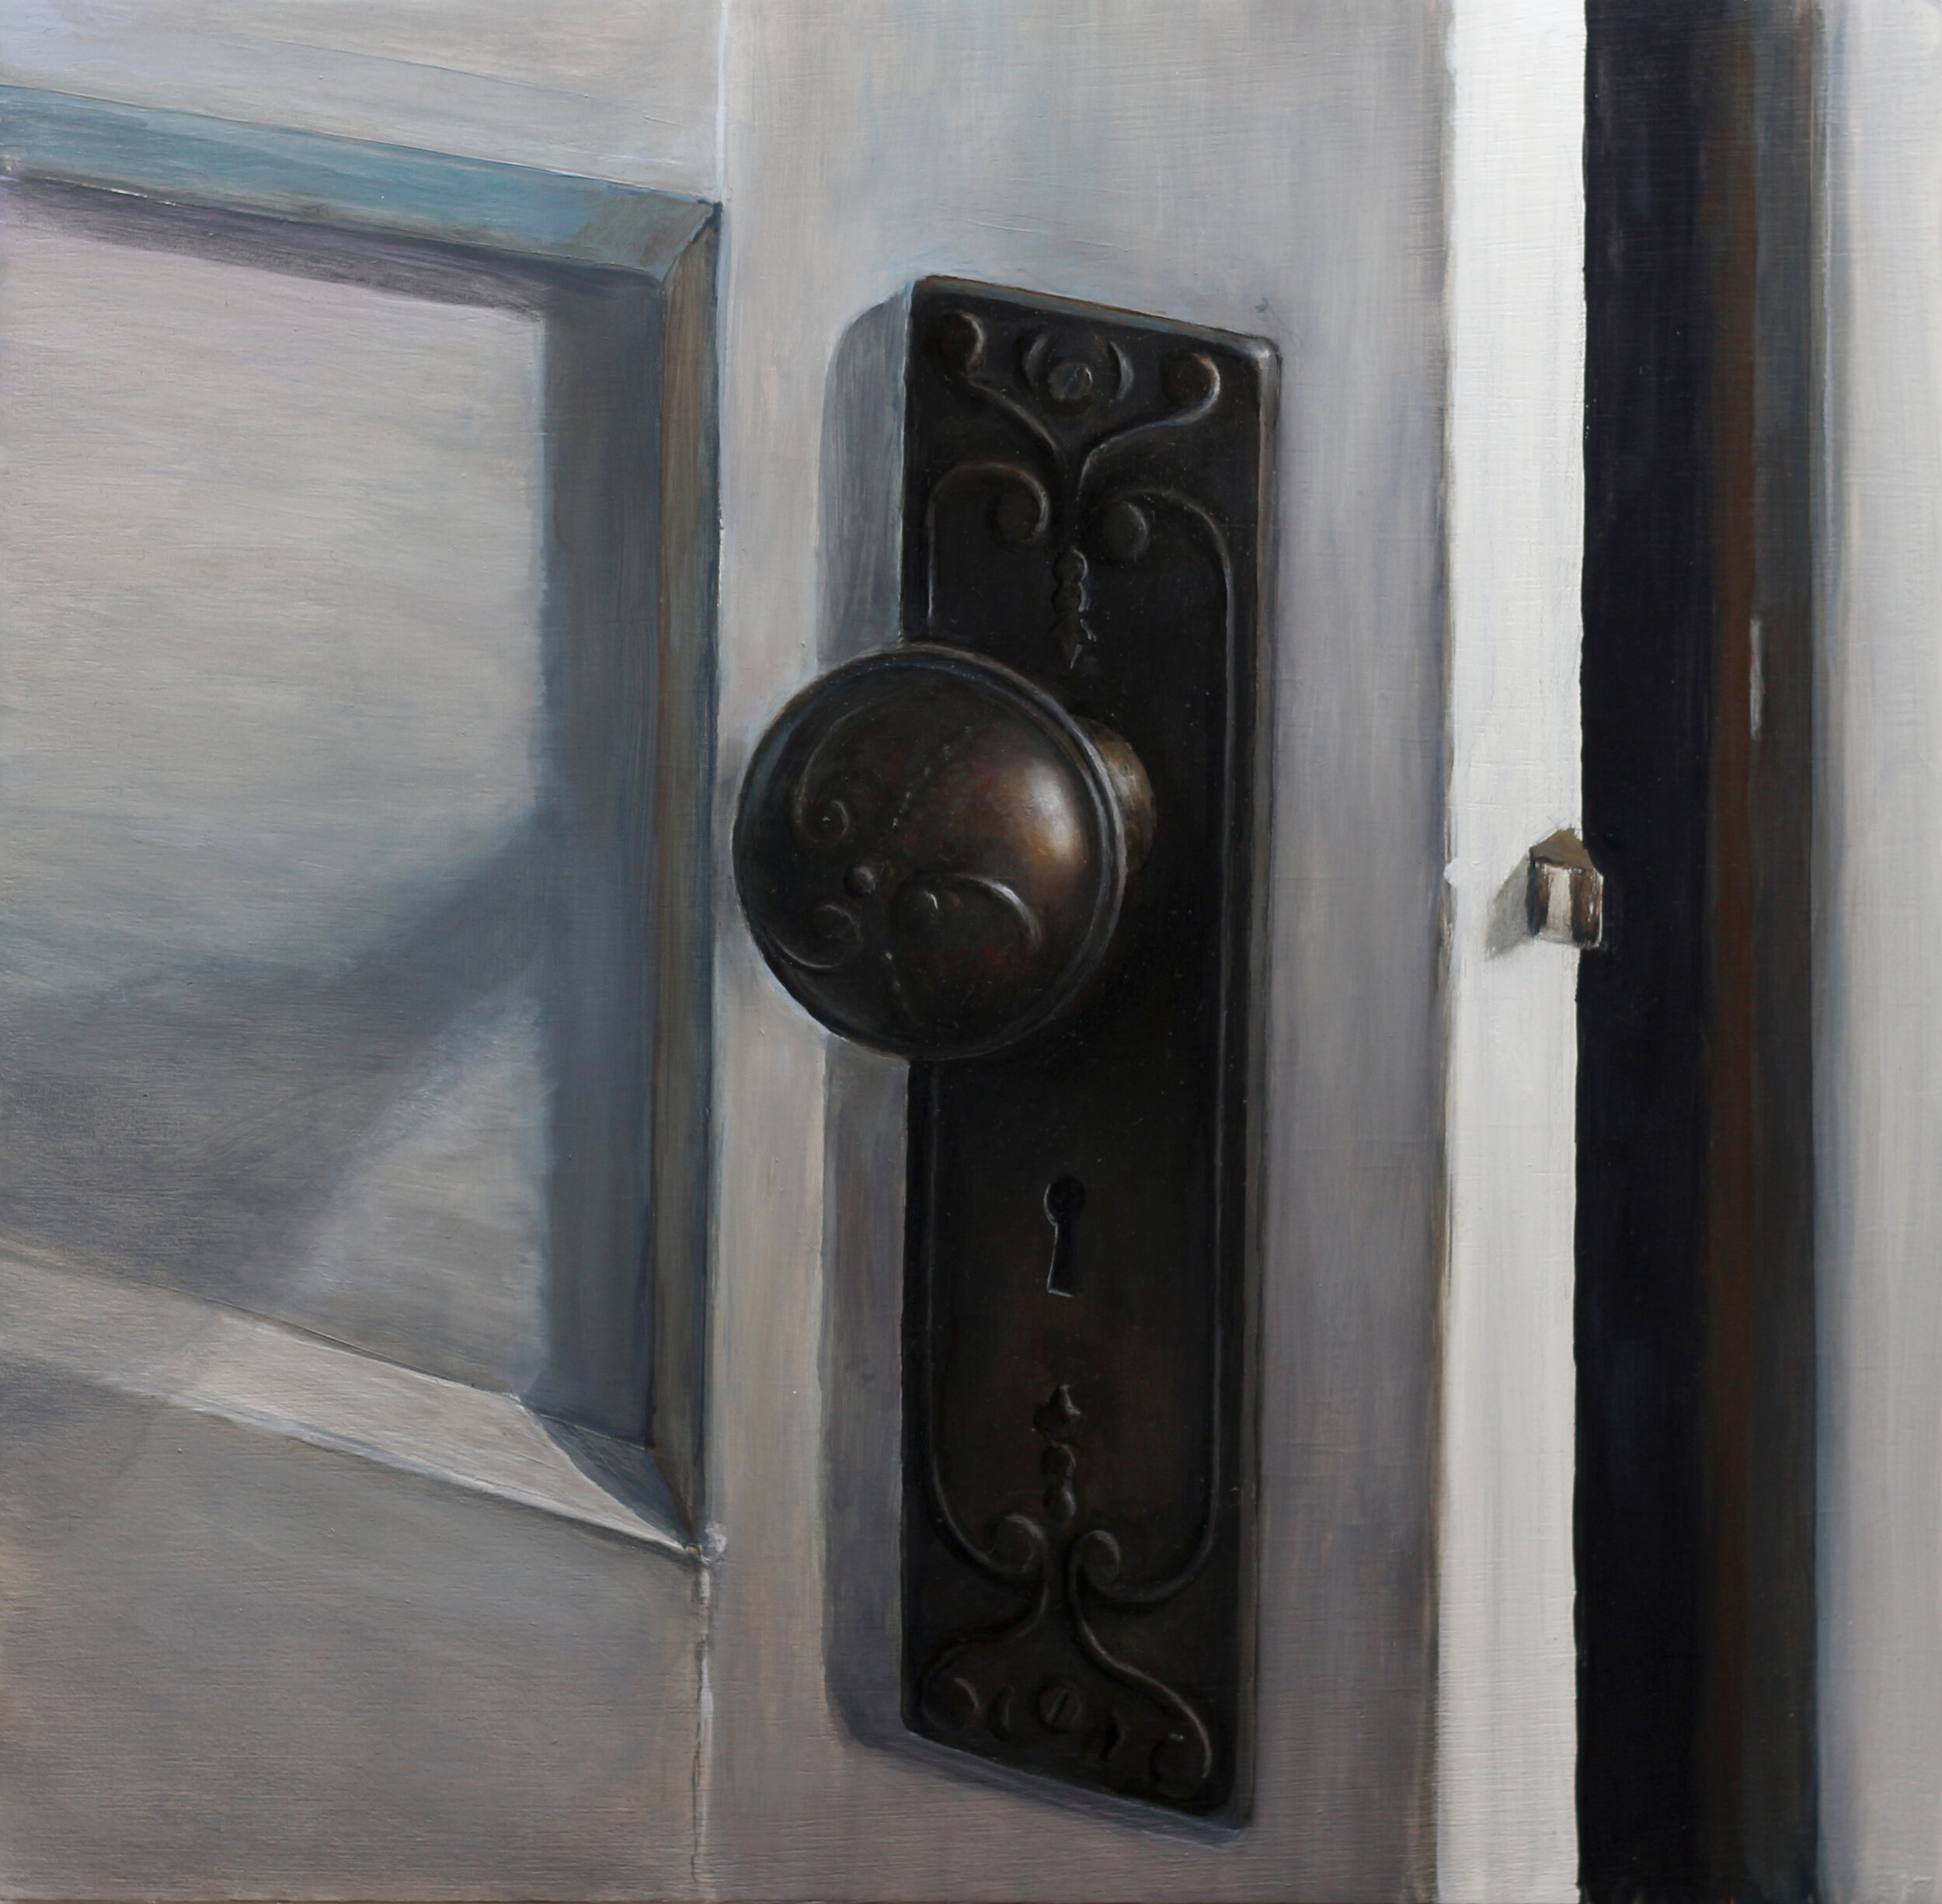   Doorknob   2020  Oil on panel  10 x 10 inches       